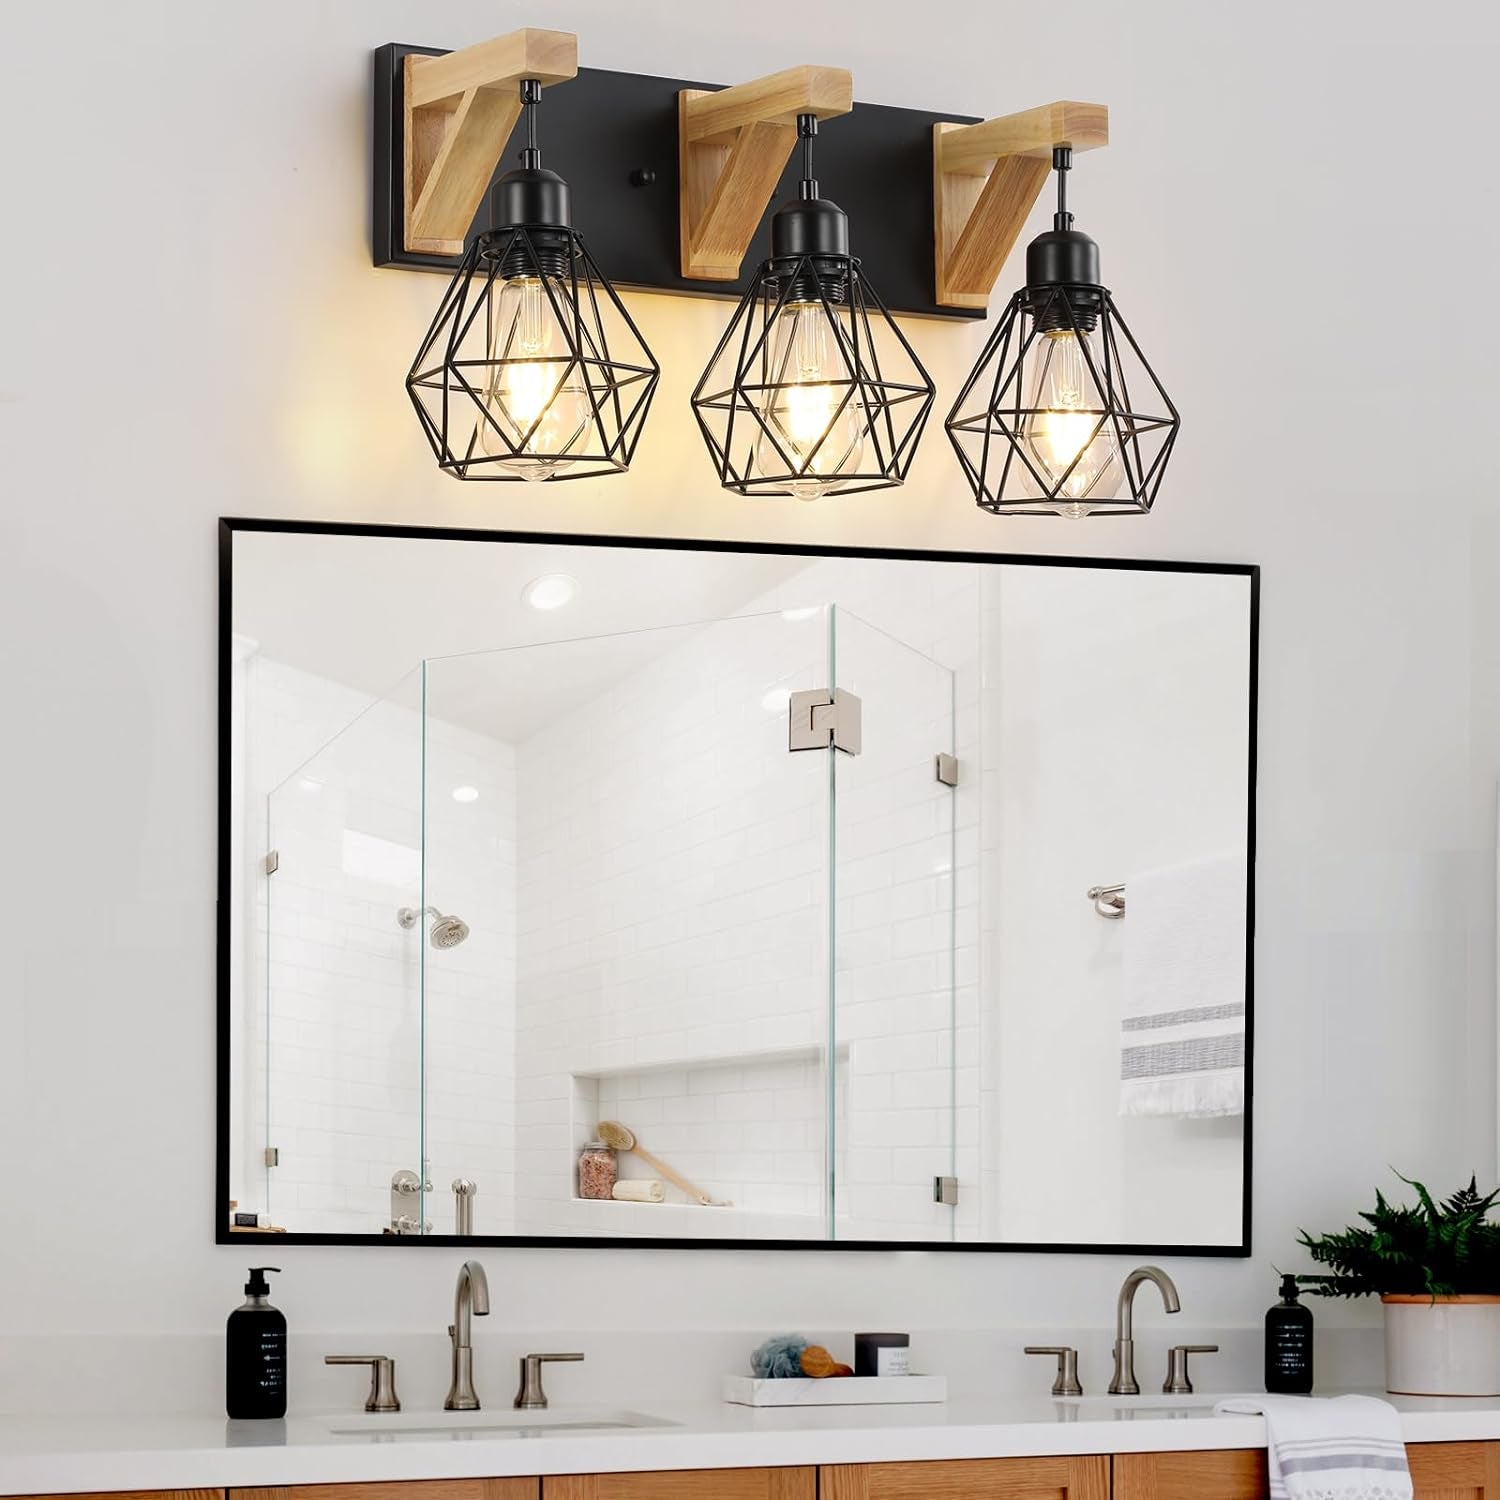 3-Light Farmhouse Bathroom Vanity Light Fixtures, Wood Bathroom Light over Mirror, Rustic Sconces Wall Lighting with Elegant Metal Lampshade for Living Room, Bedroom, Hallway